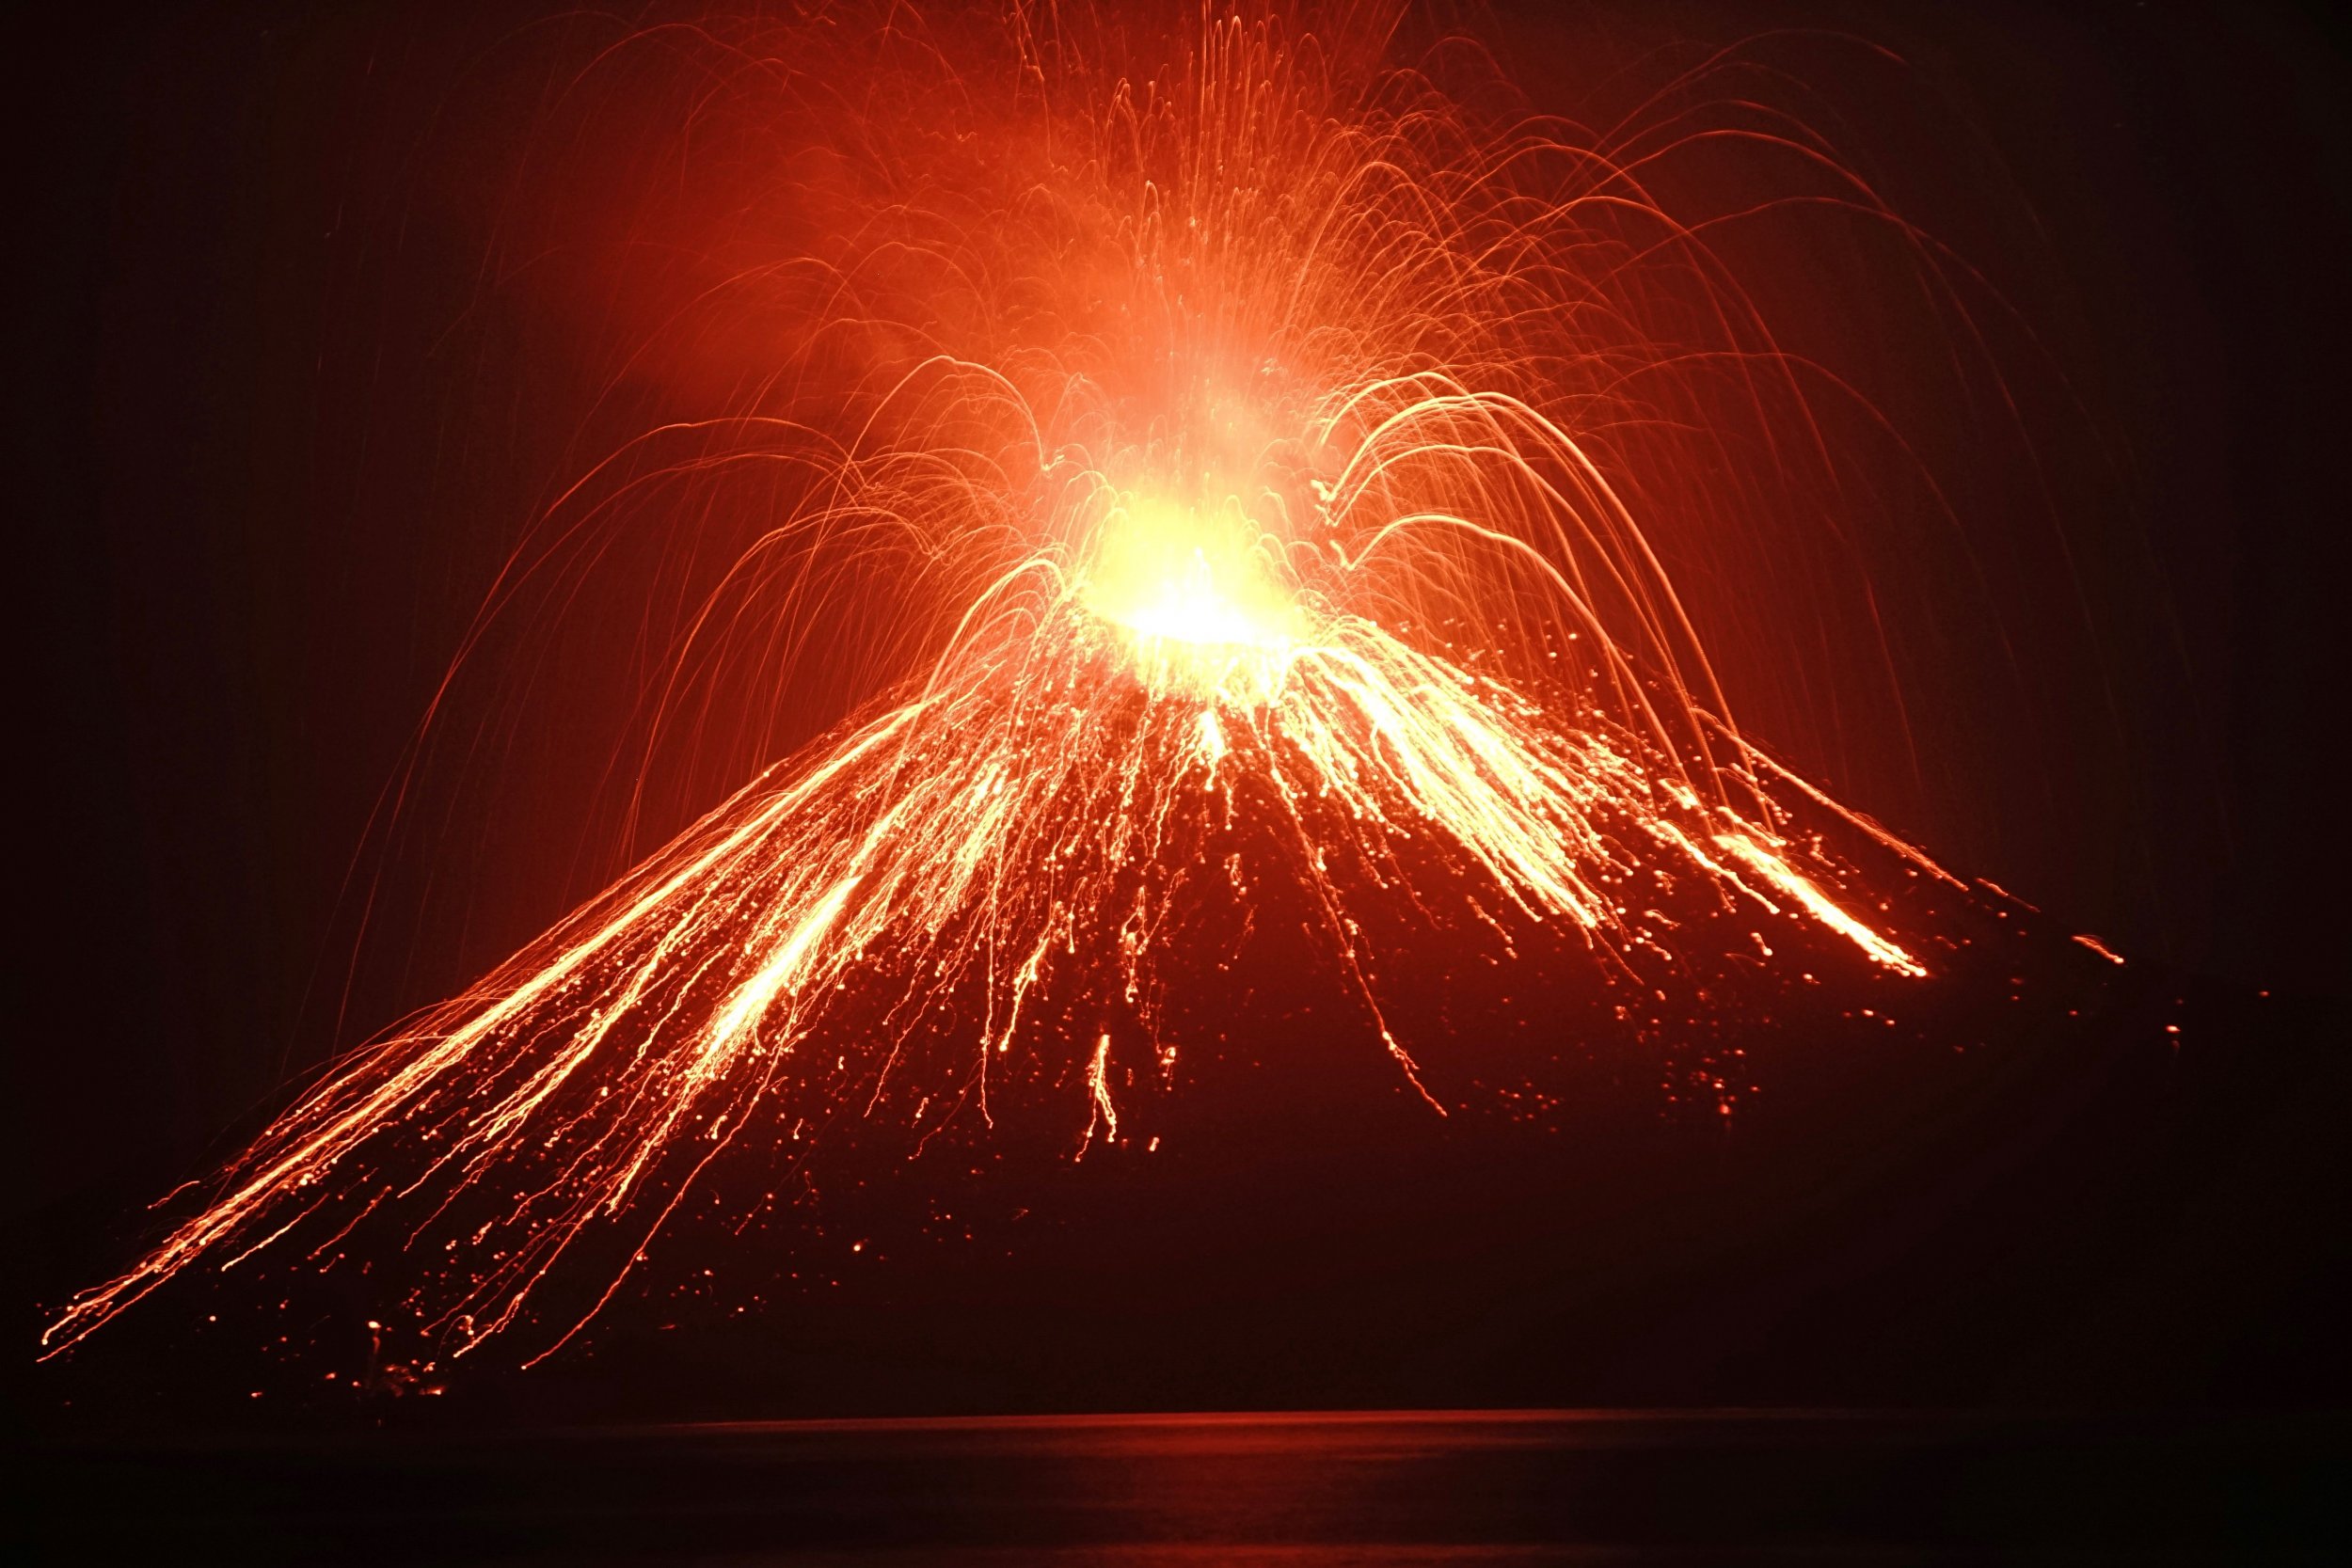 Anak Krakatau Spectacular Video Shows Volcano Generating Its Own